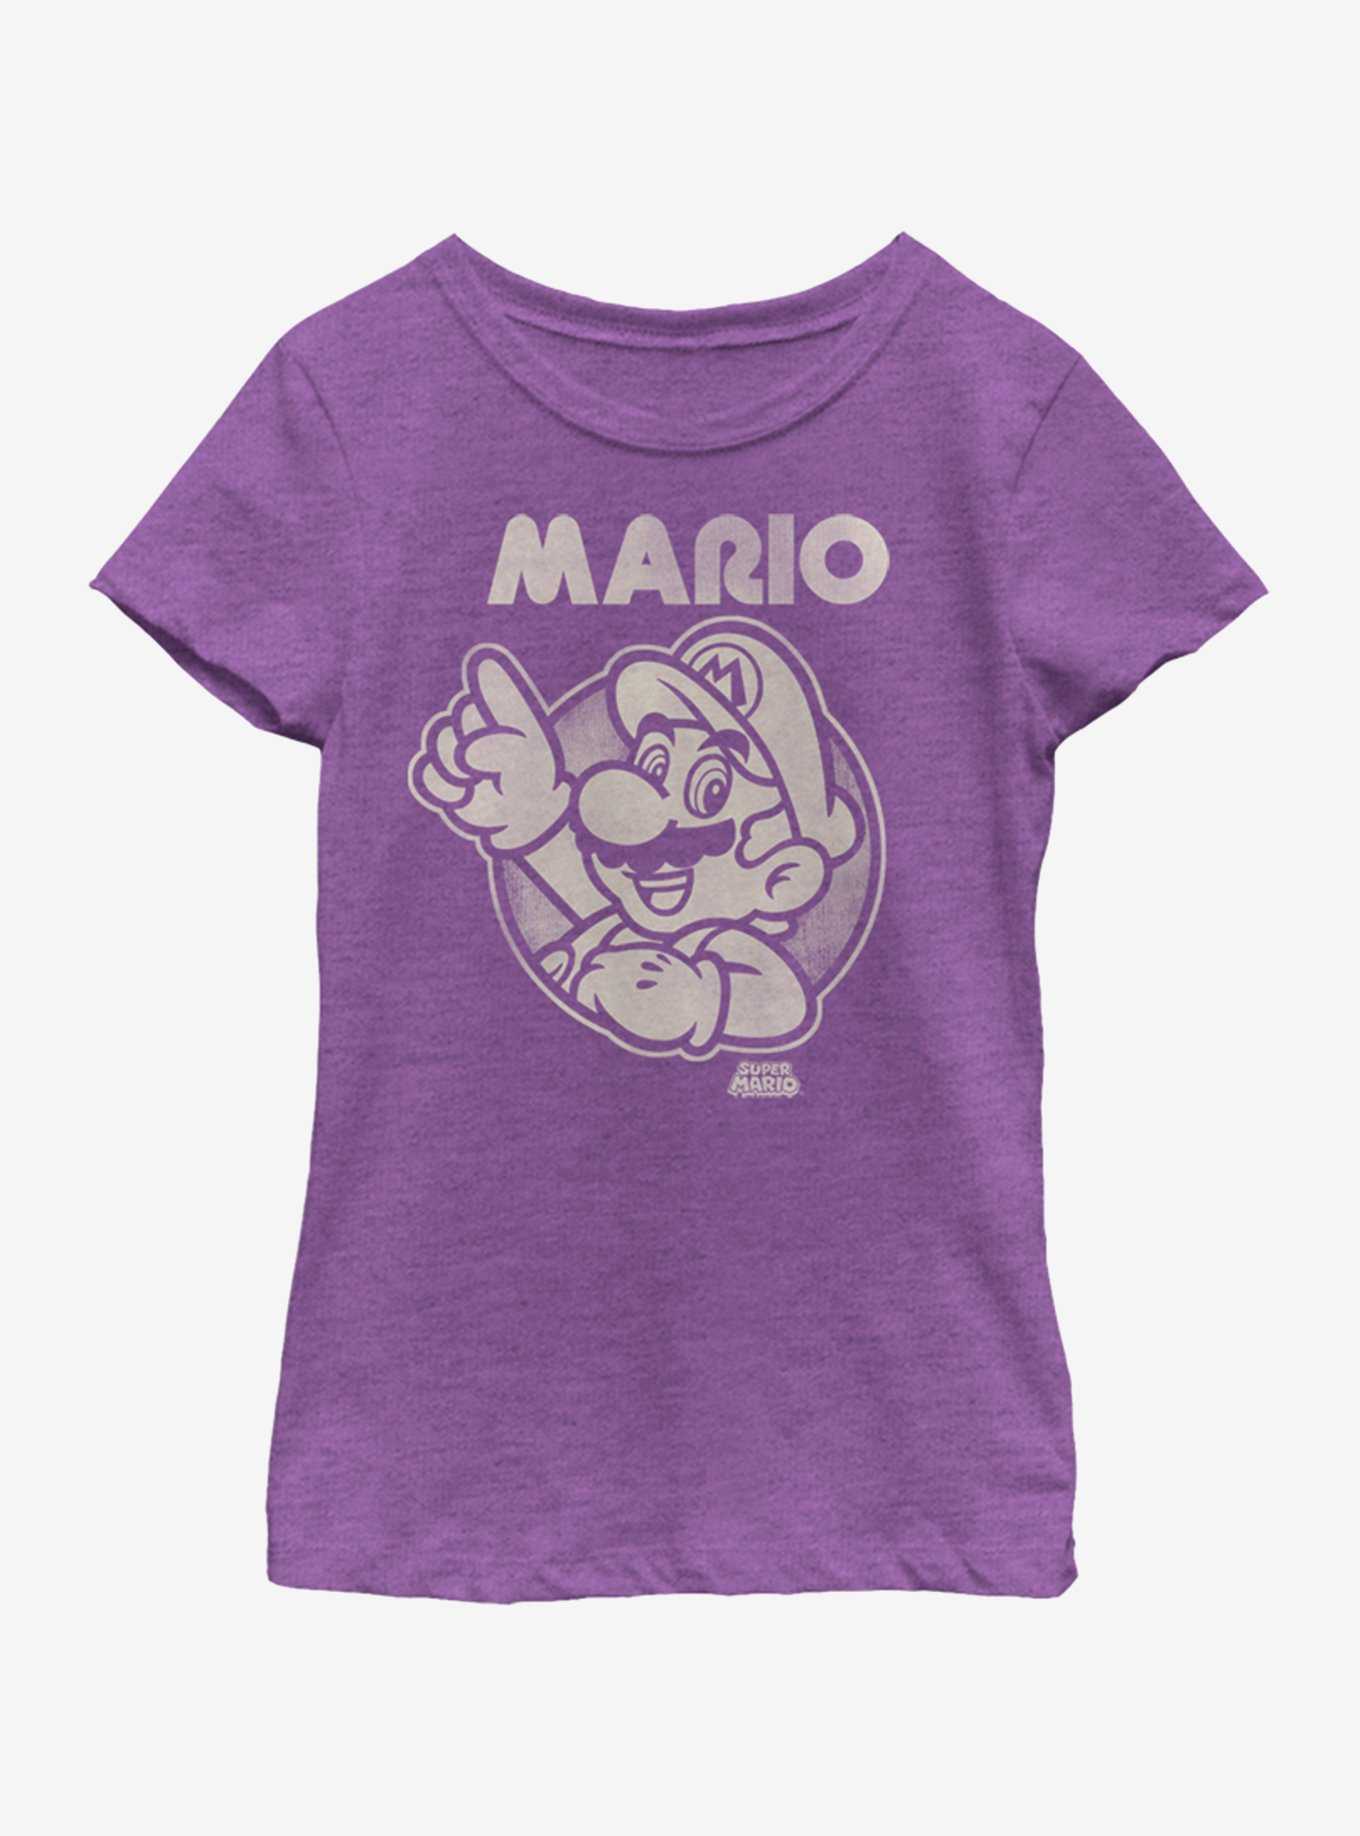 Nintendo Super Mario So Mario Youth Girls T-Shirt, , hi-res